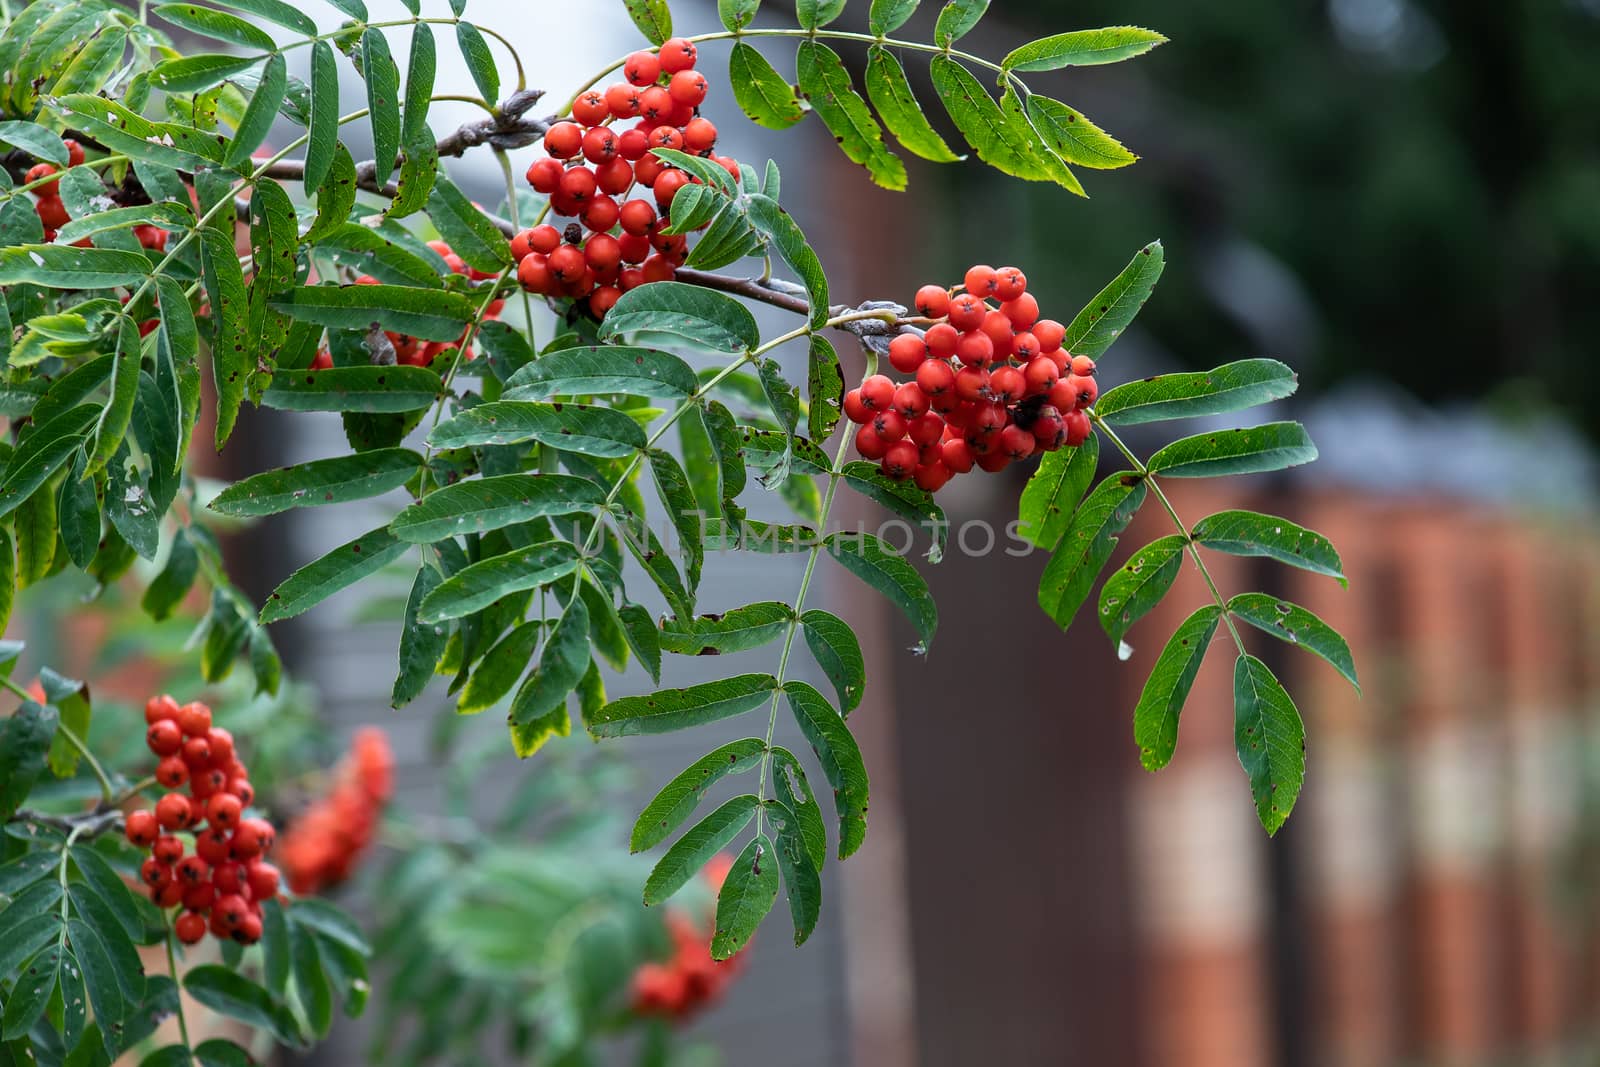 Red rowan berries on the rowan tree branches, ripe rowan berries closeup and green leaves in autumn garden by bonilook